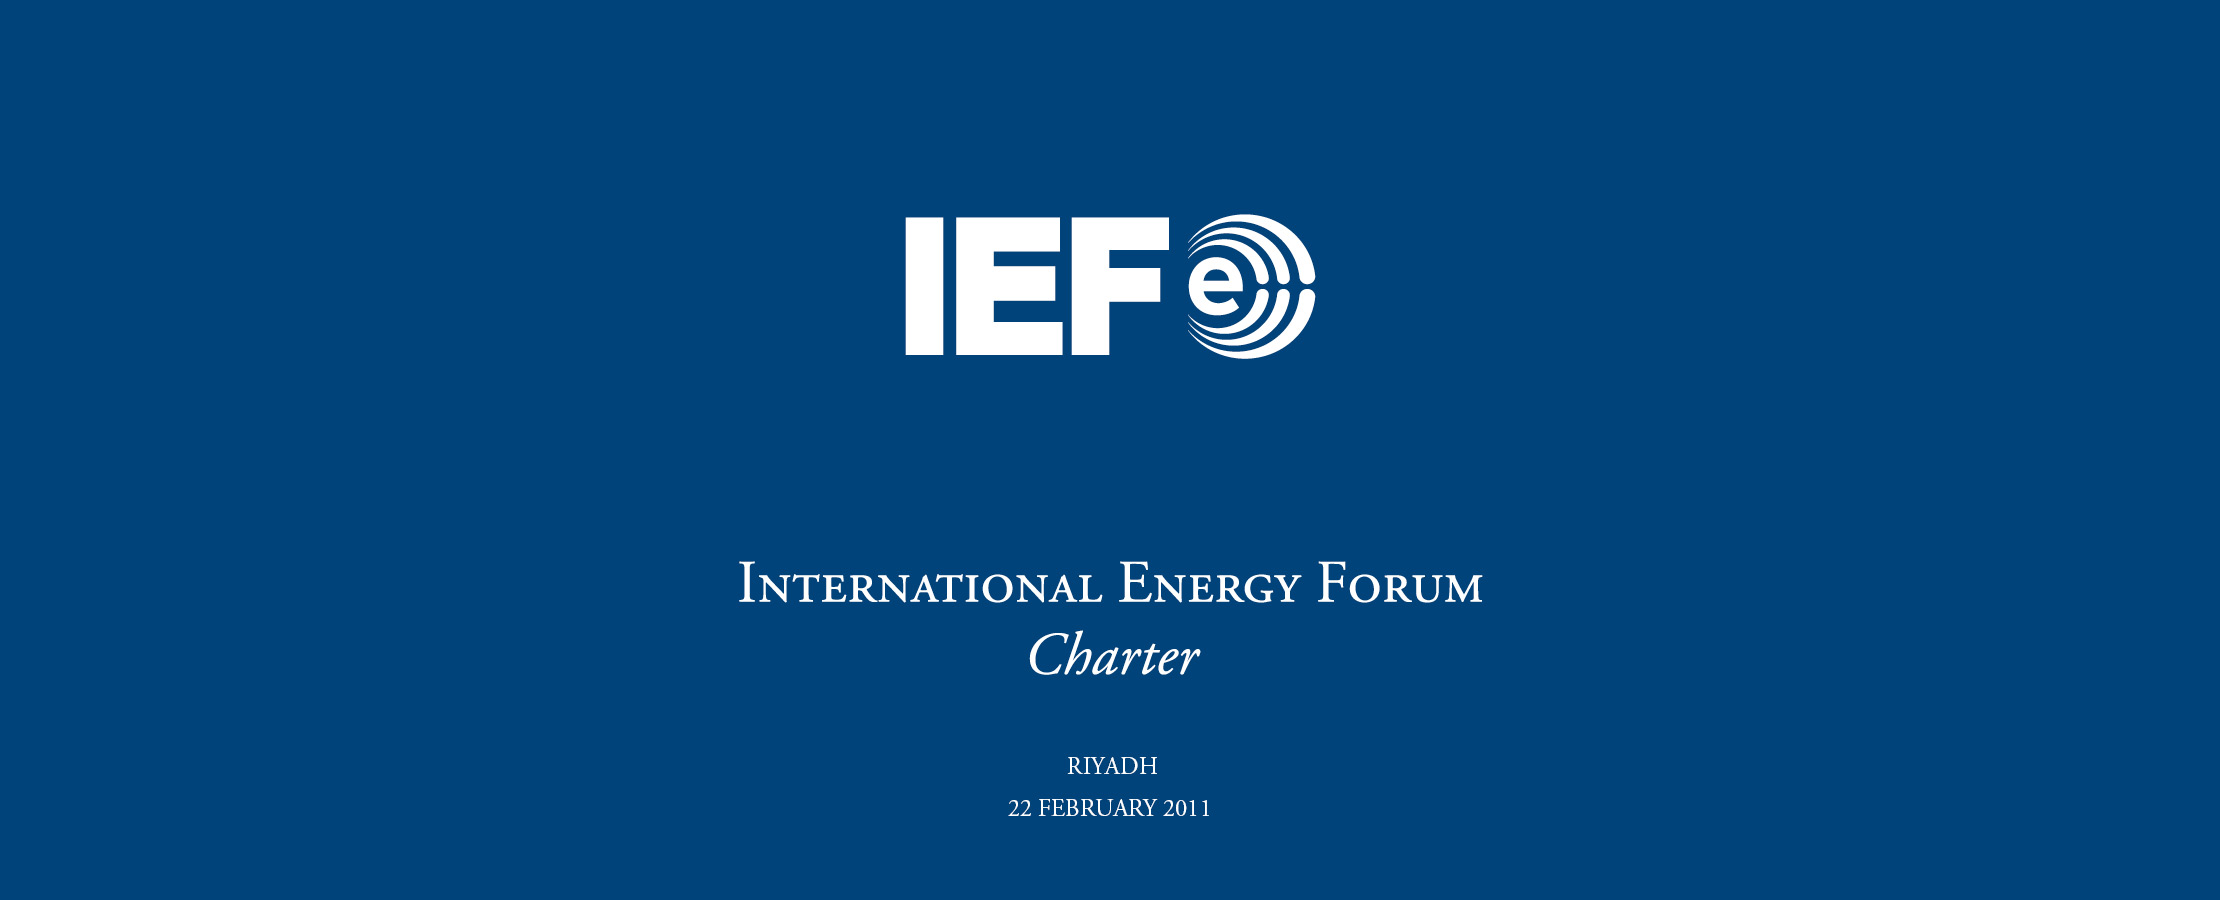 IEF Charter